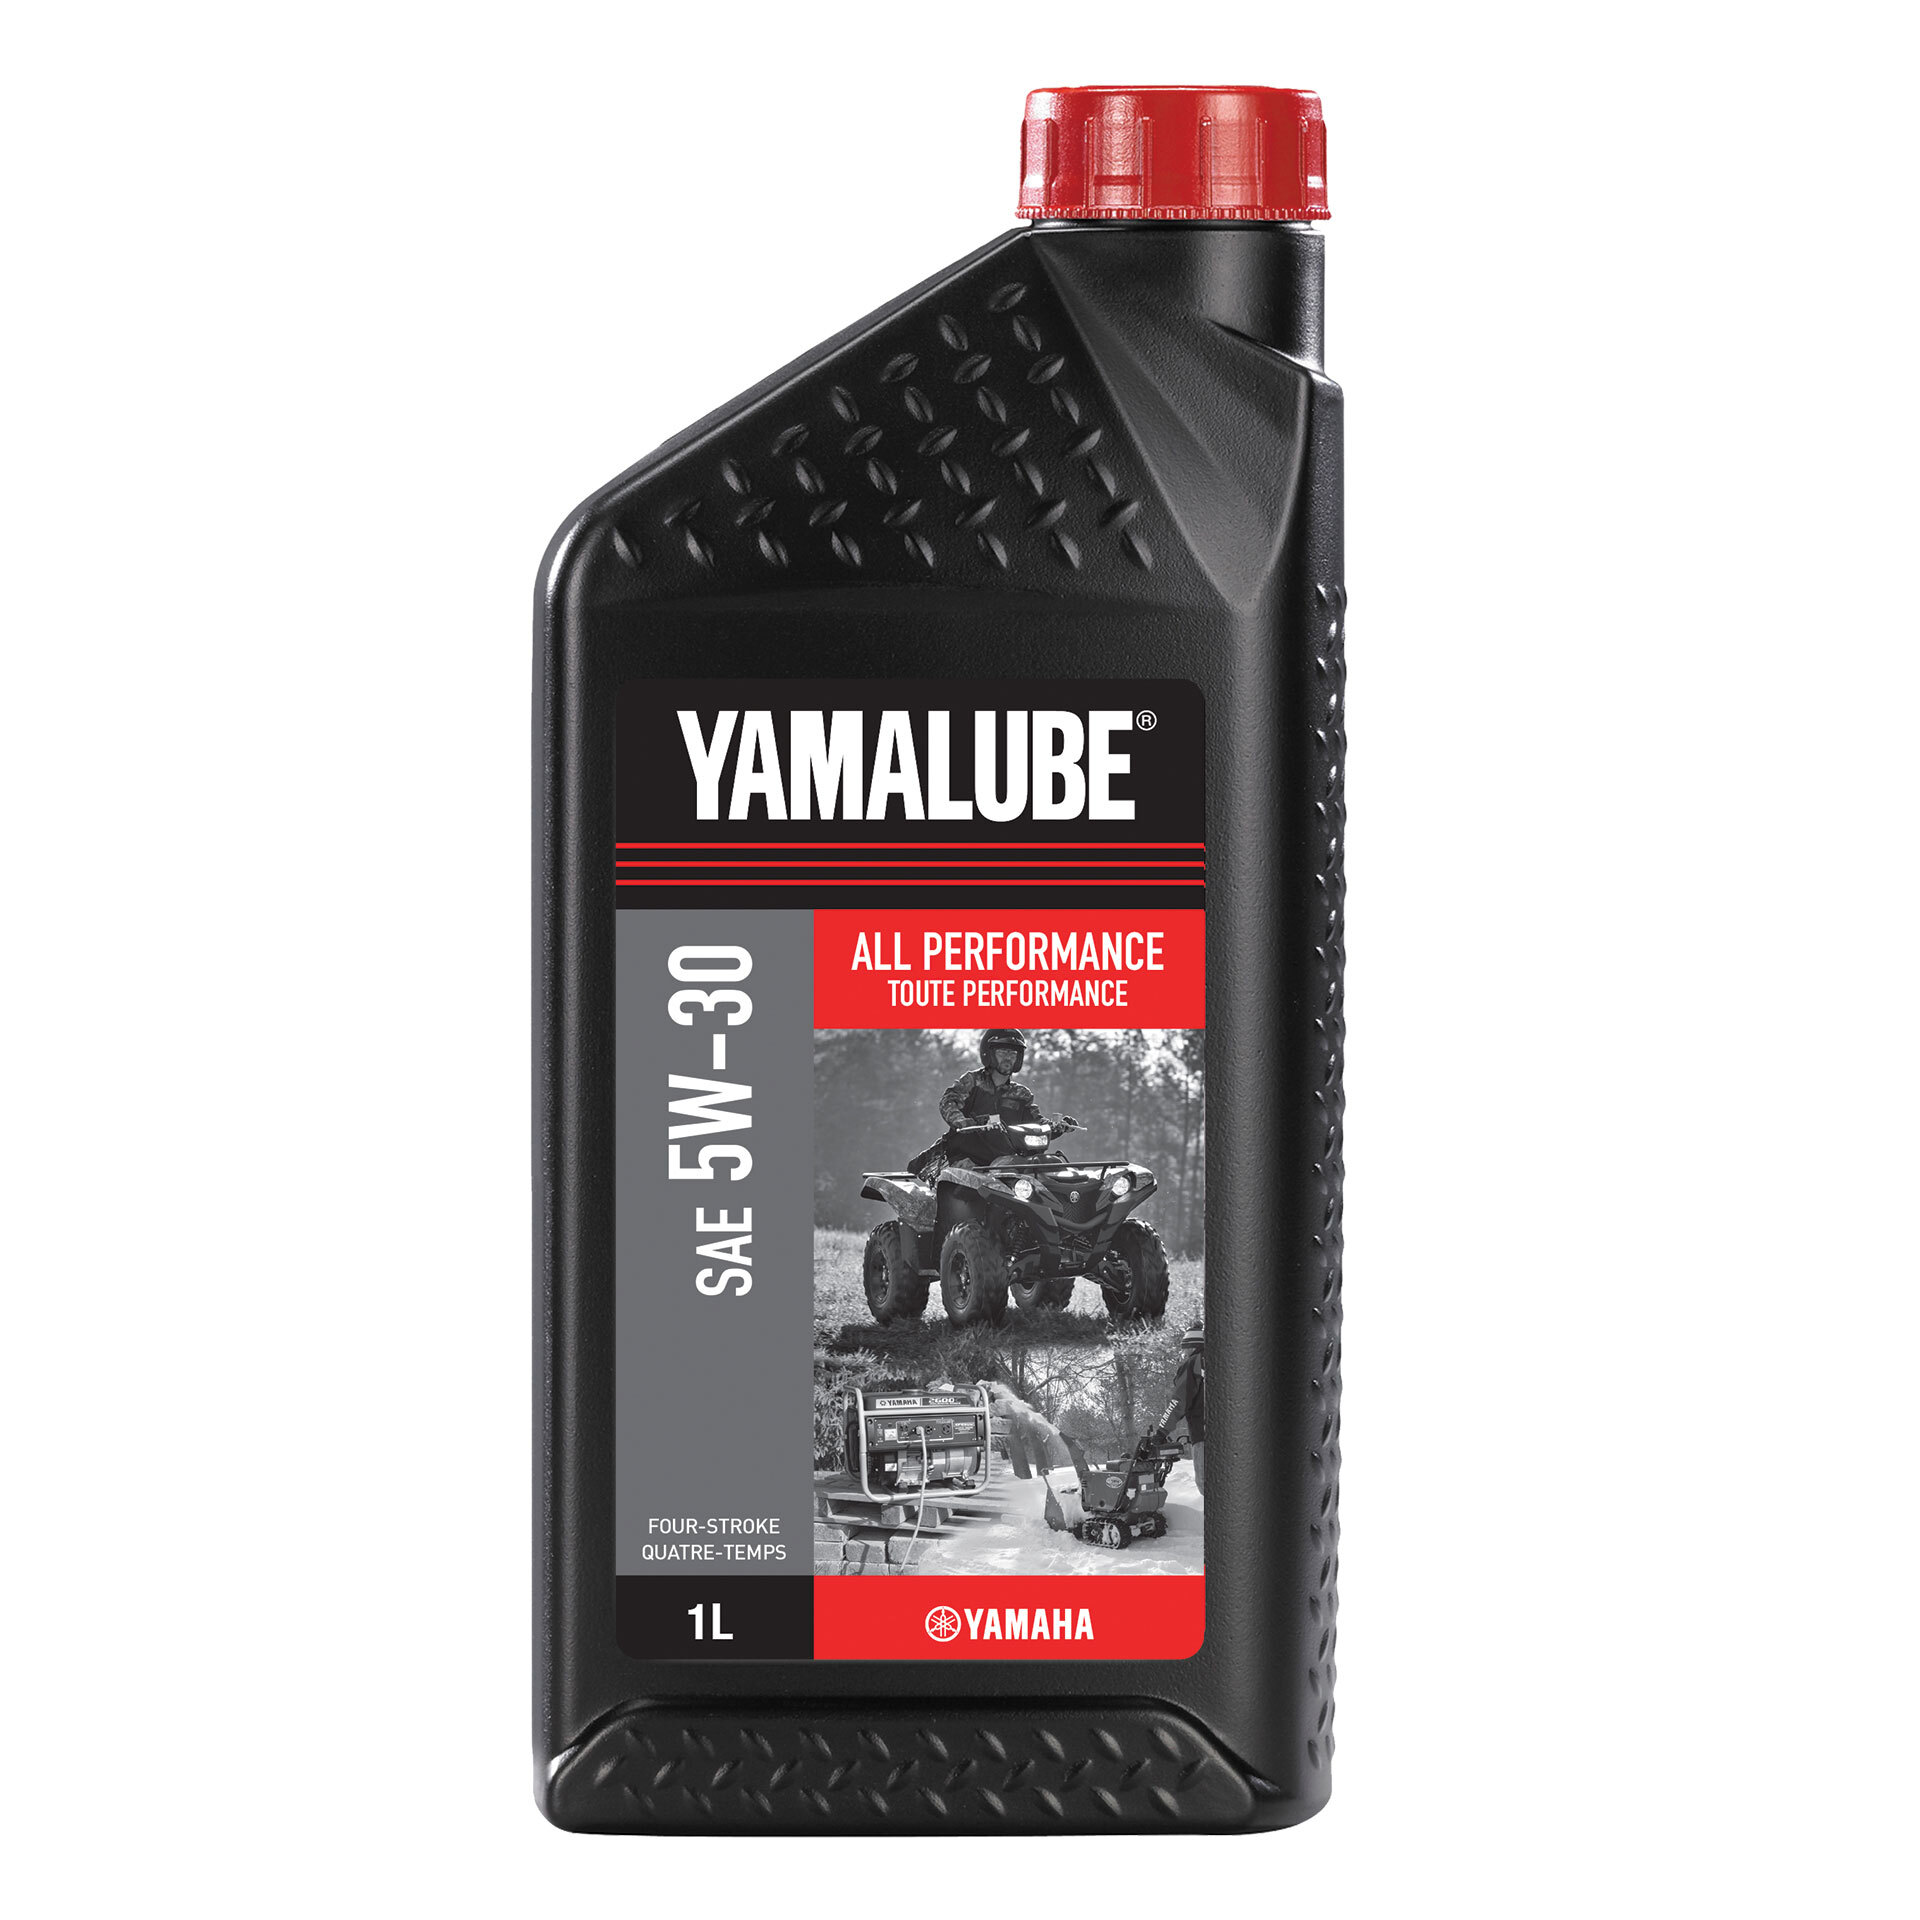 Yamalube® 5W 30 All Performance Engine Oil